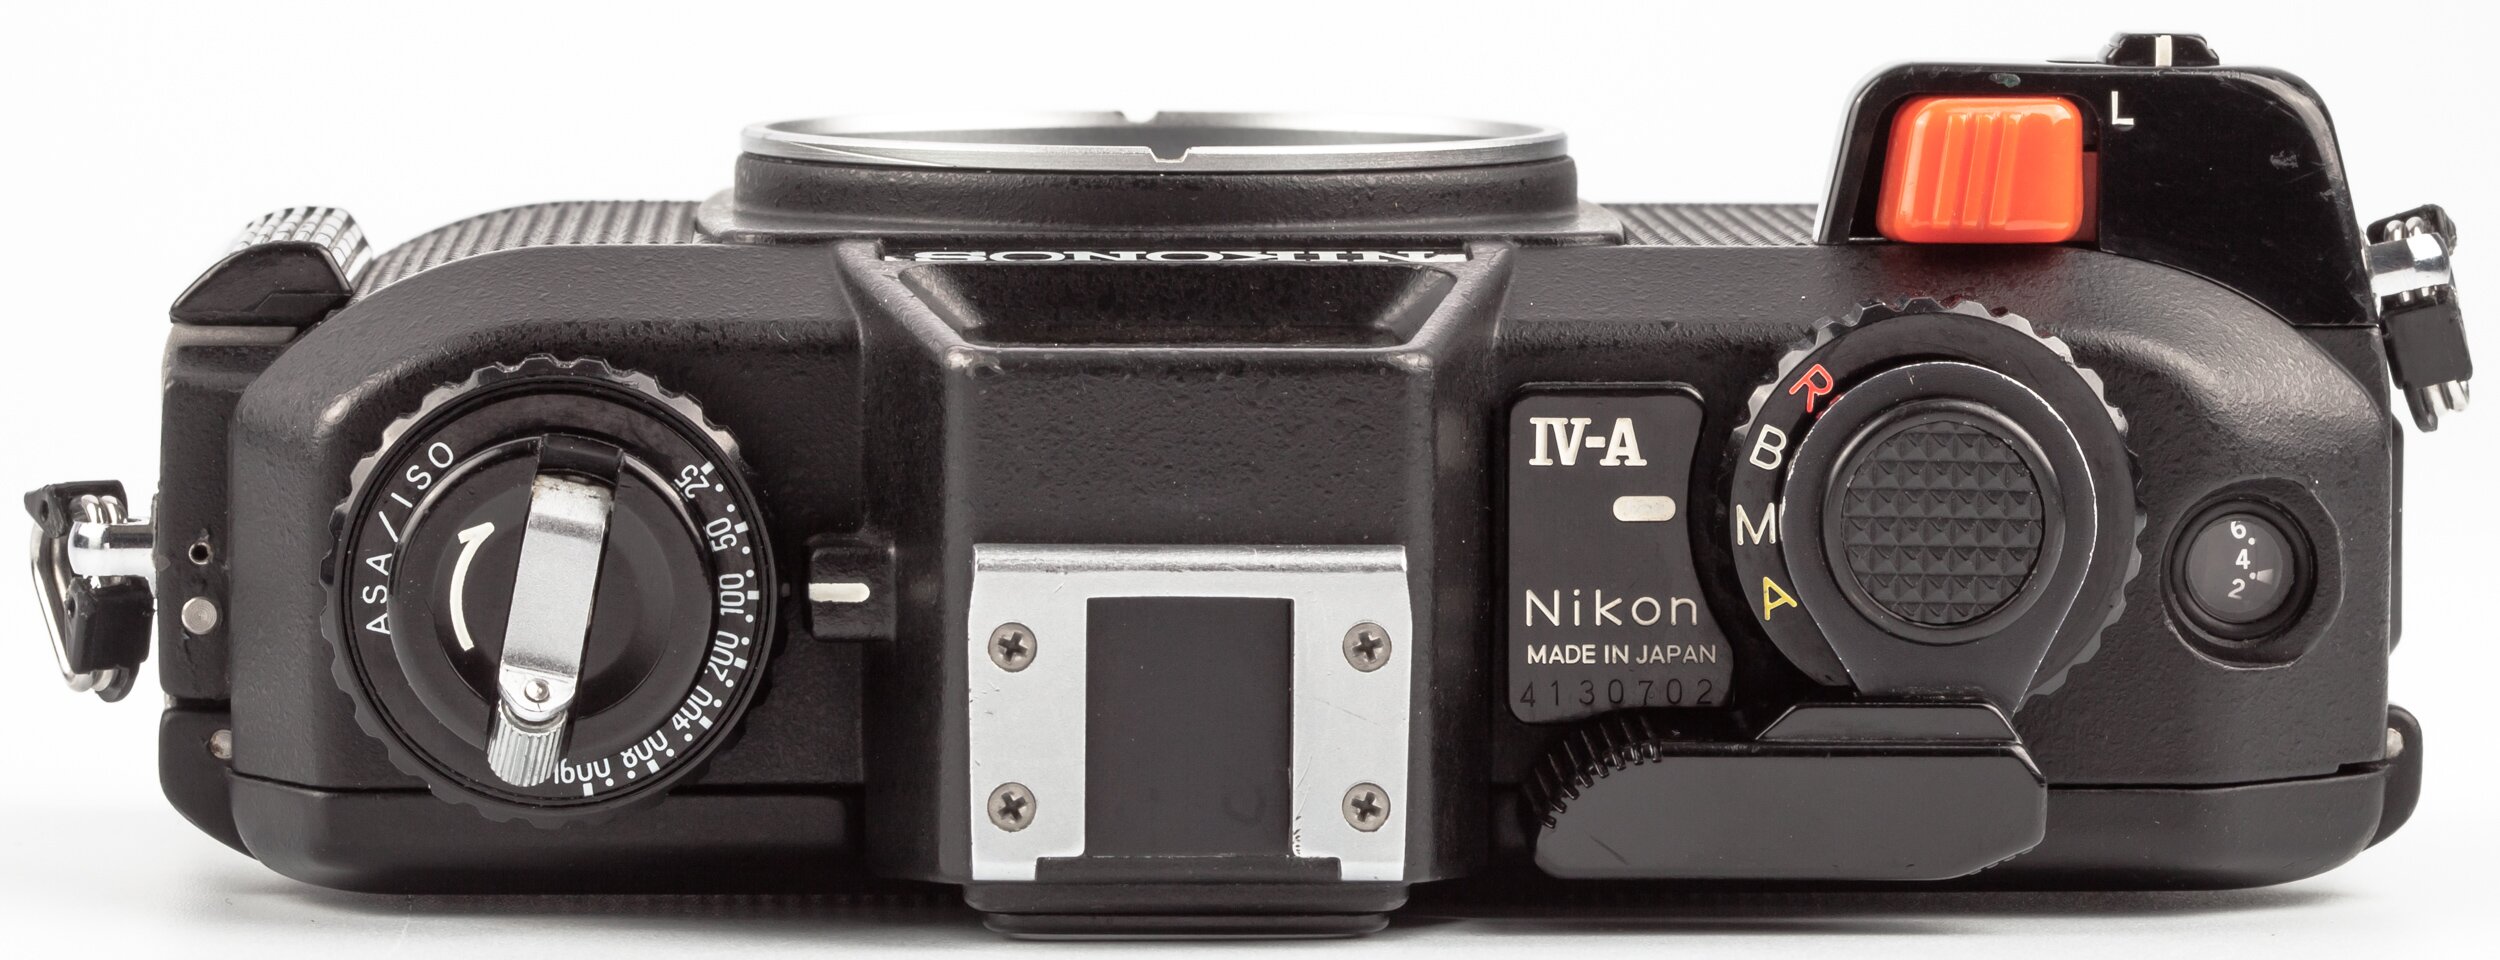 Nikon Nikonos IV-A Body Black